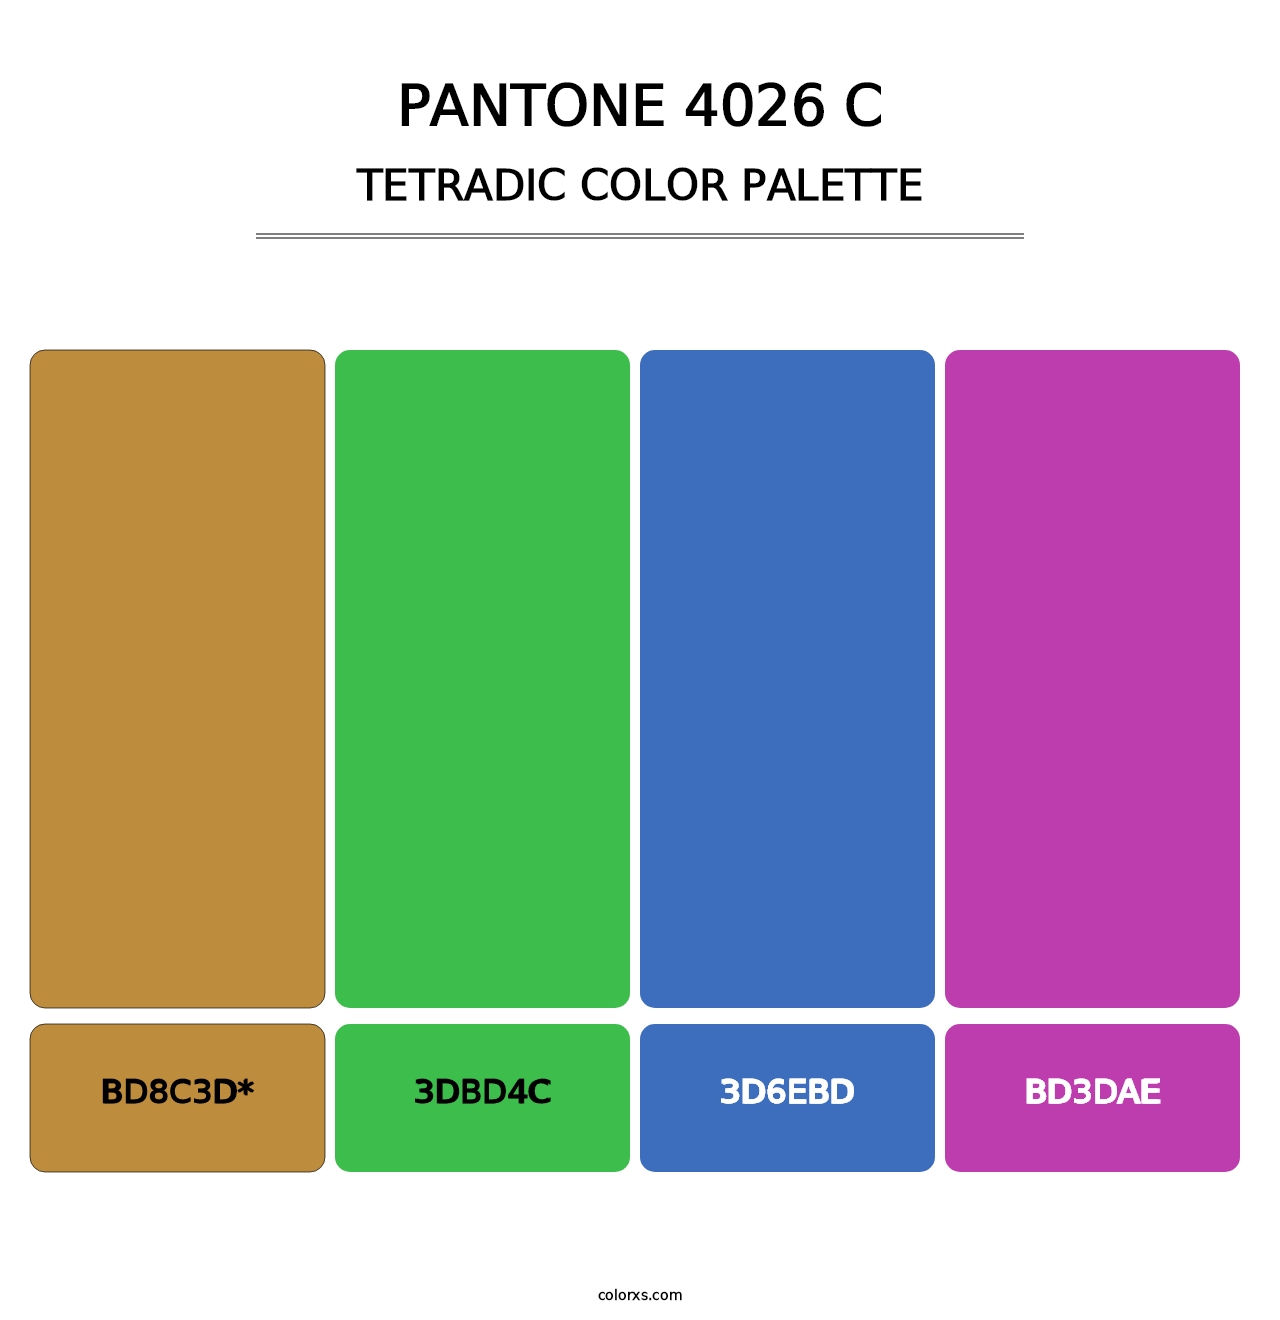 PANTONE 4026 C - Tetradic Color Palette